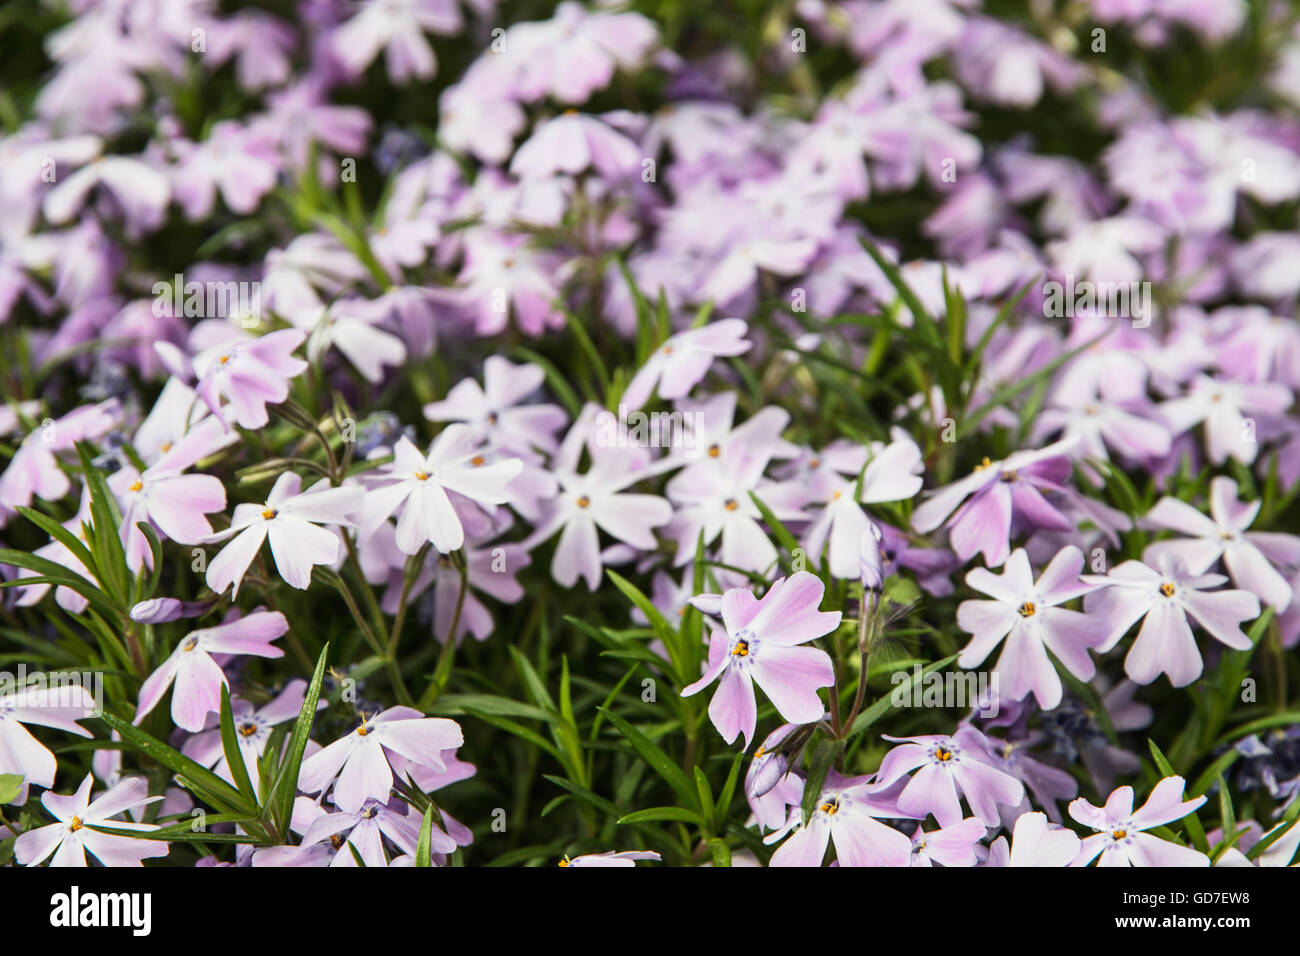 Background of Phlox subulata flowers - Creeping phlox or Moss phlox or Moss pink or Mountain phlox. Gardening theme. Stock Photo